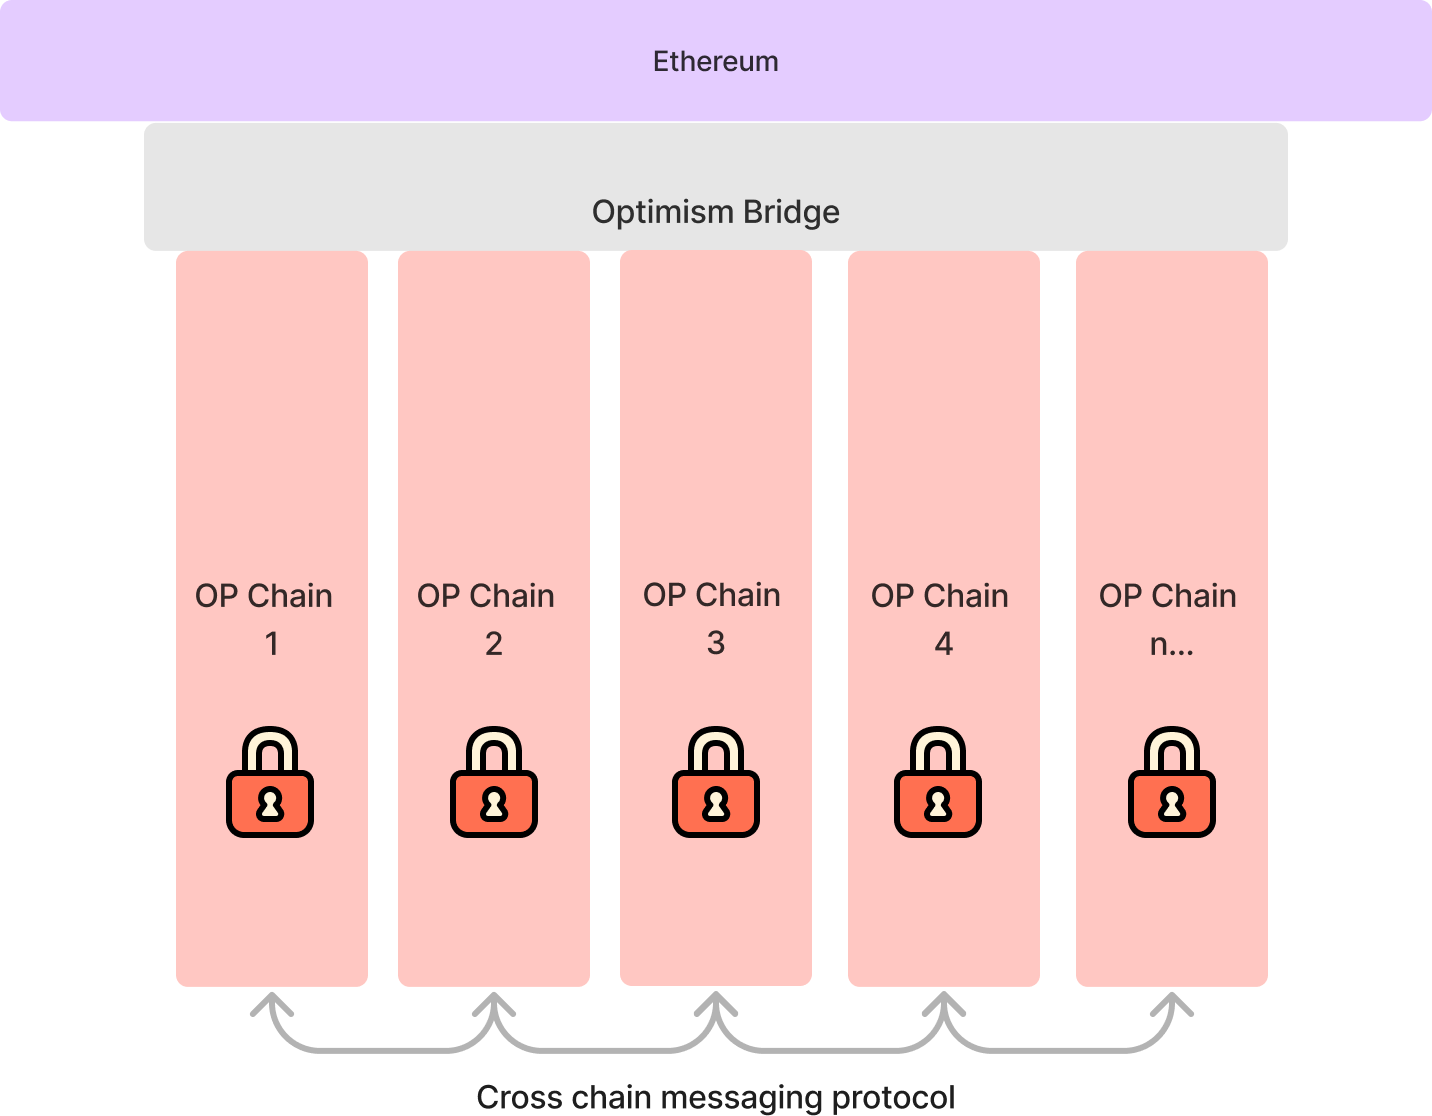 Cross chain messaging protocol